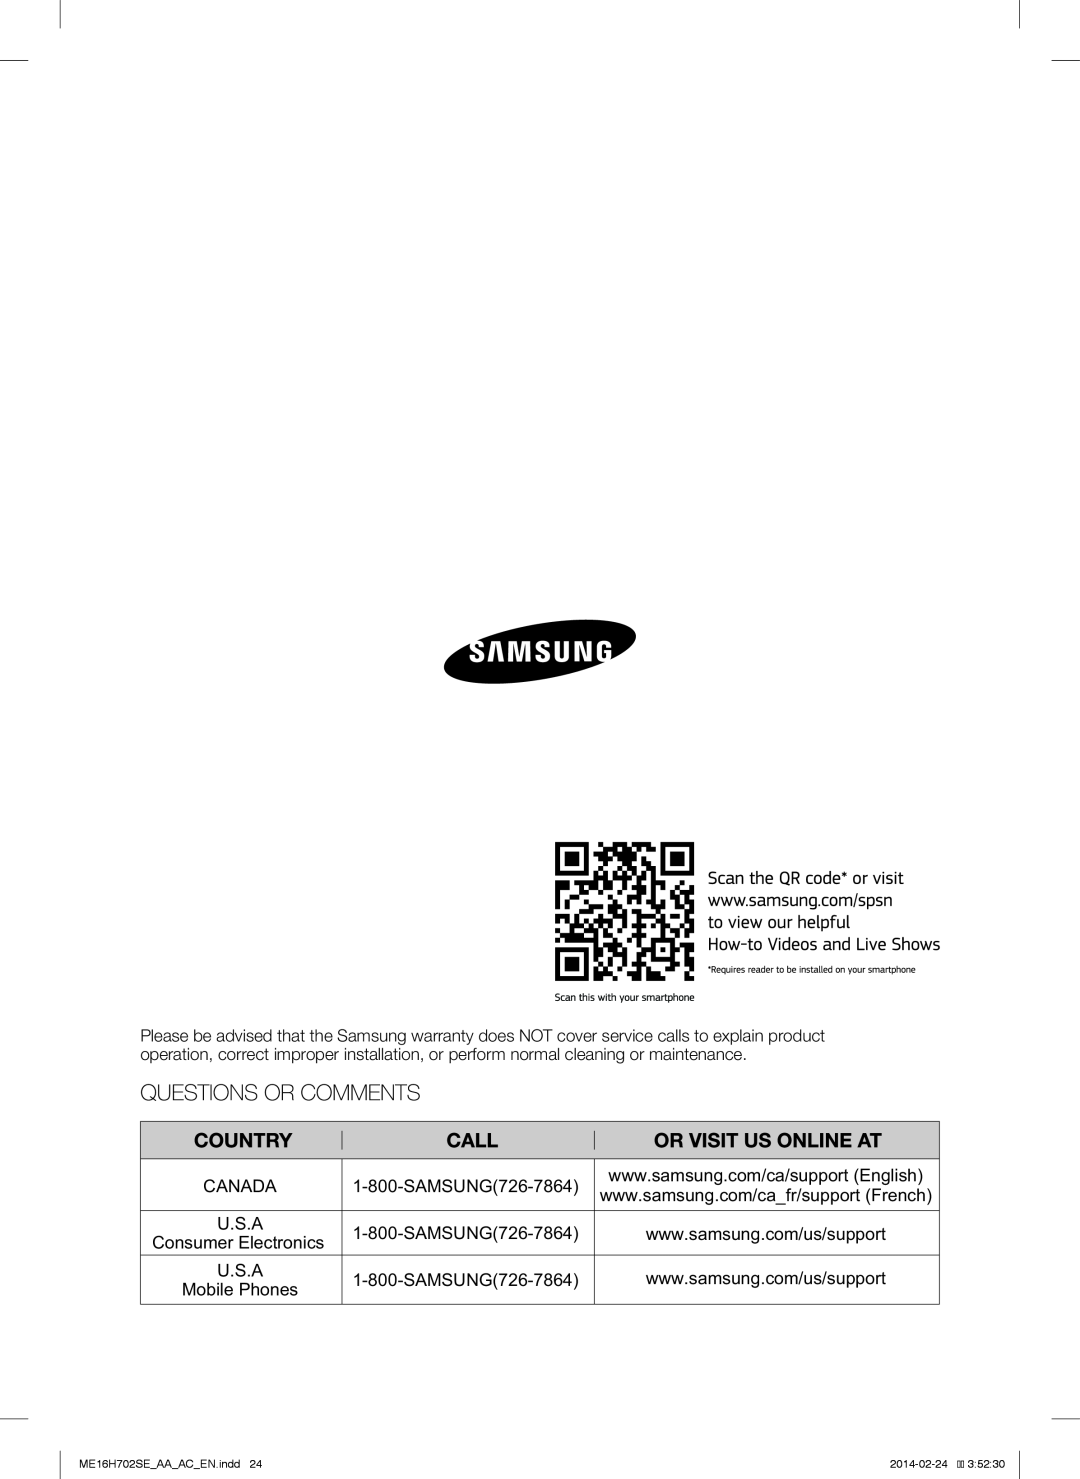 Samsung ME16H702SE user manual Canada, U.S.A, Mobile Phones 